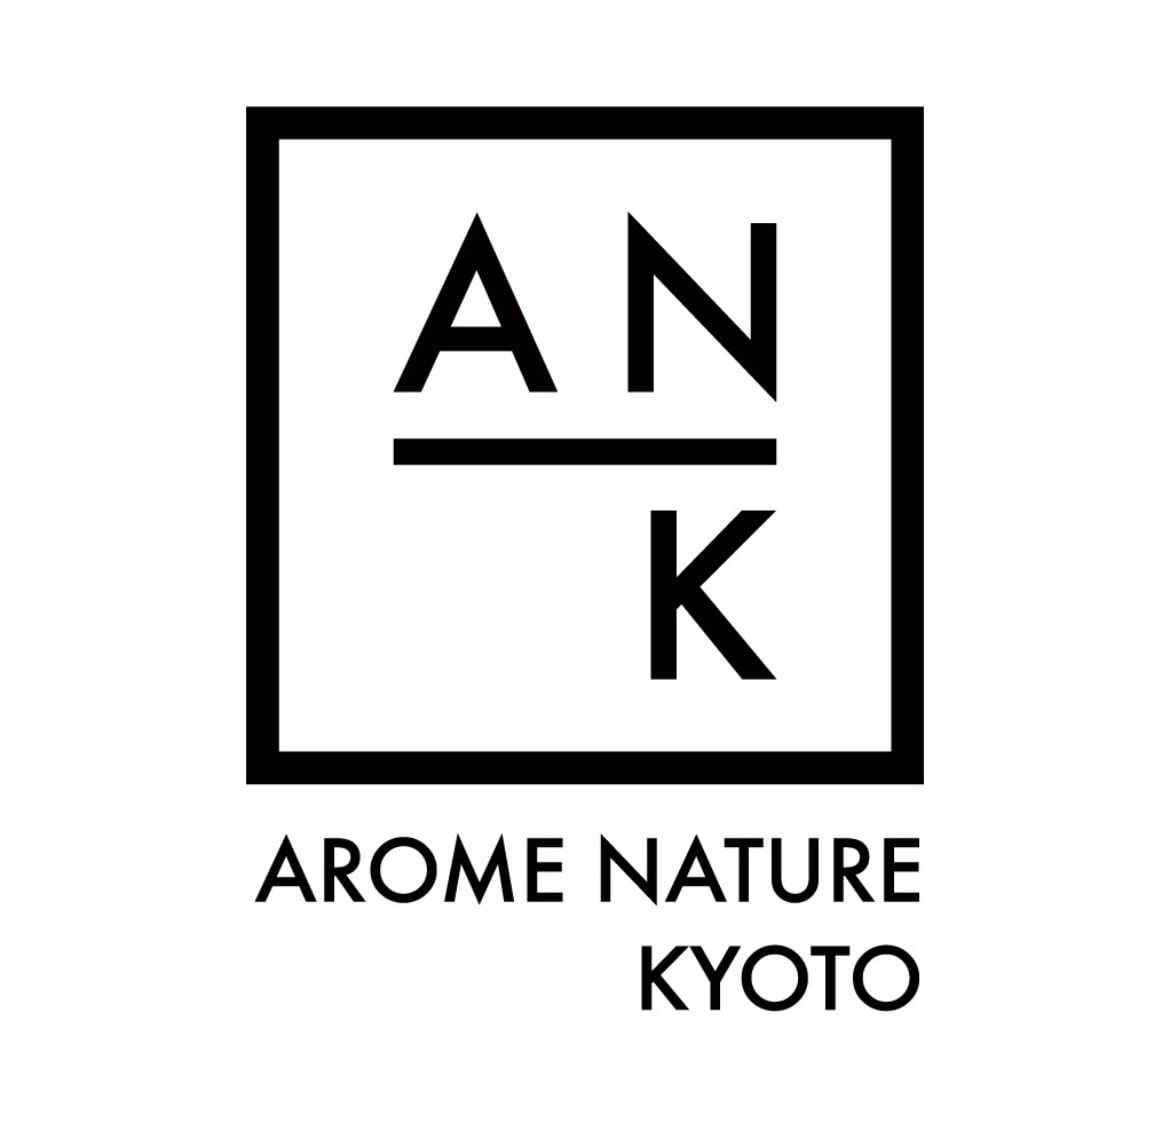 AROME NATURE KYOTO